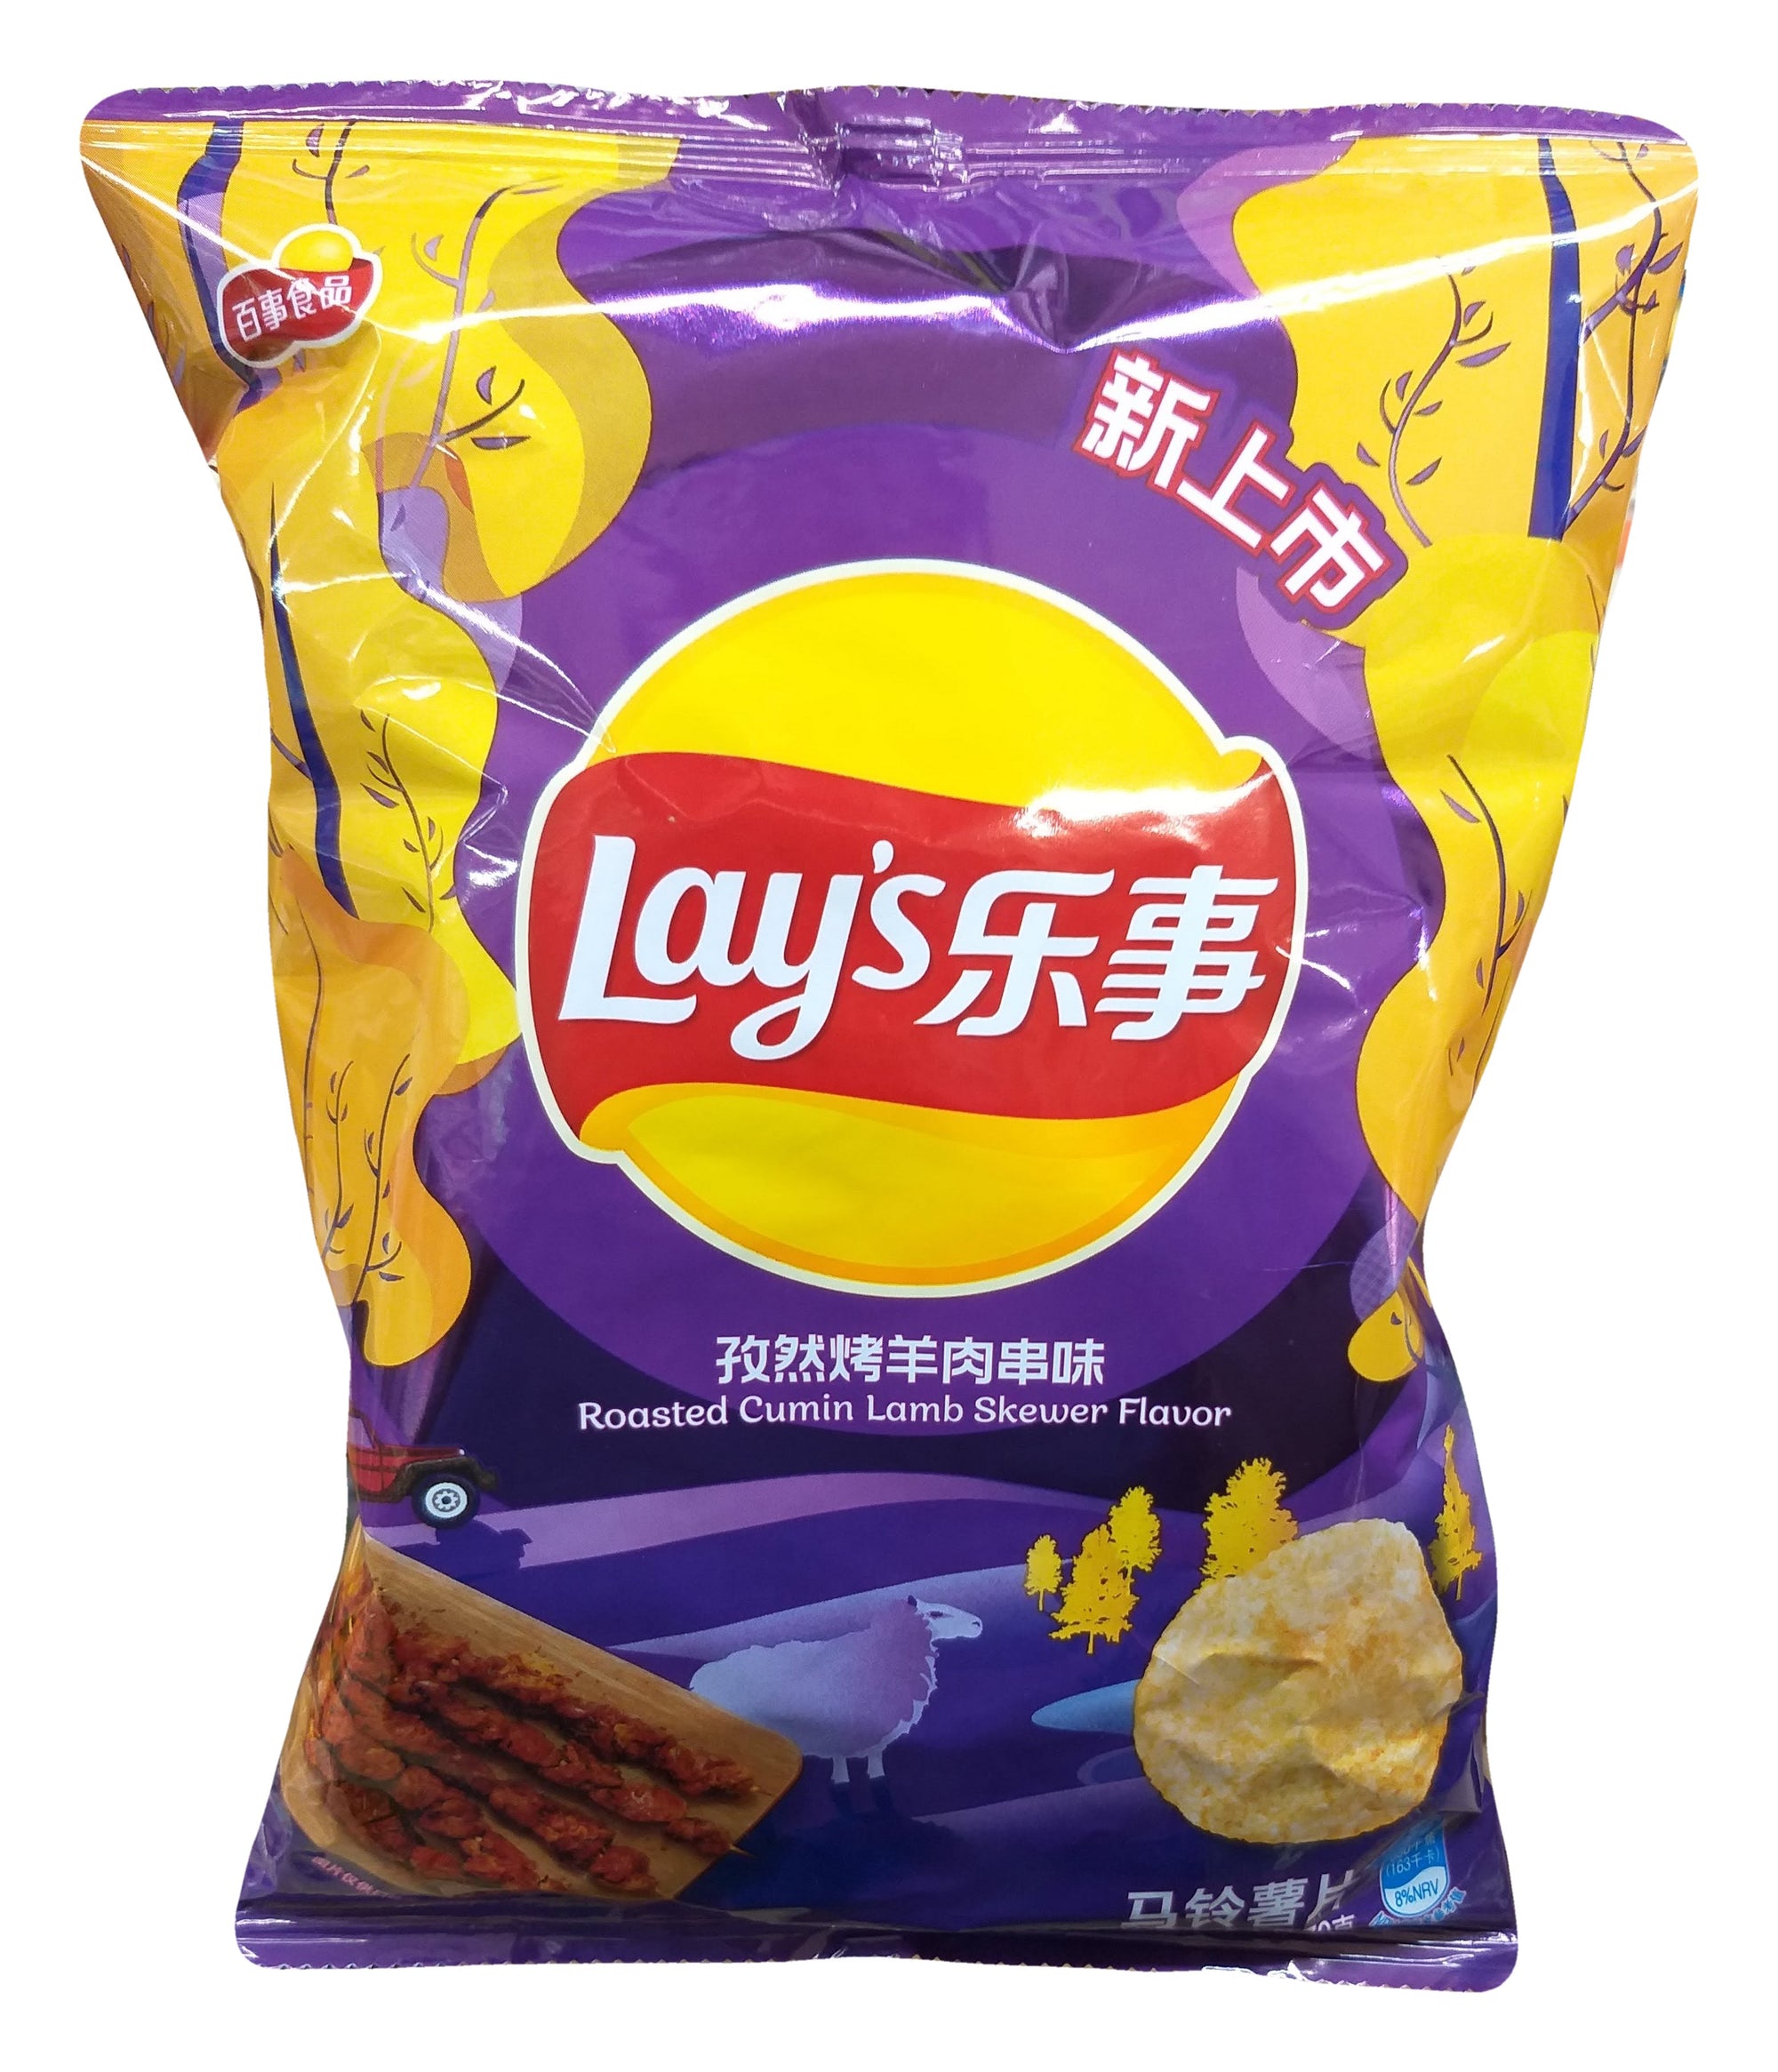 Lay's - Potato Chips (Roasted Cumin Lamb Skewer),  2.4 Ounces, (2 Bags)